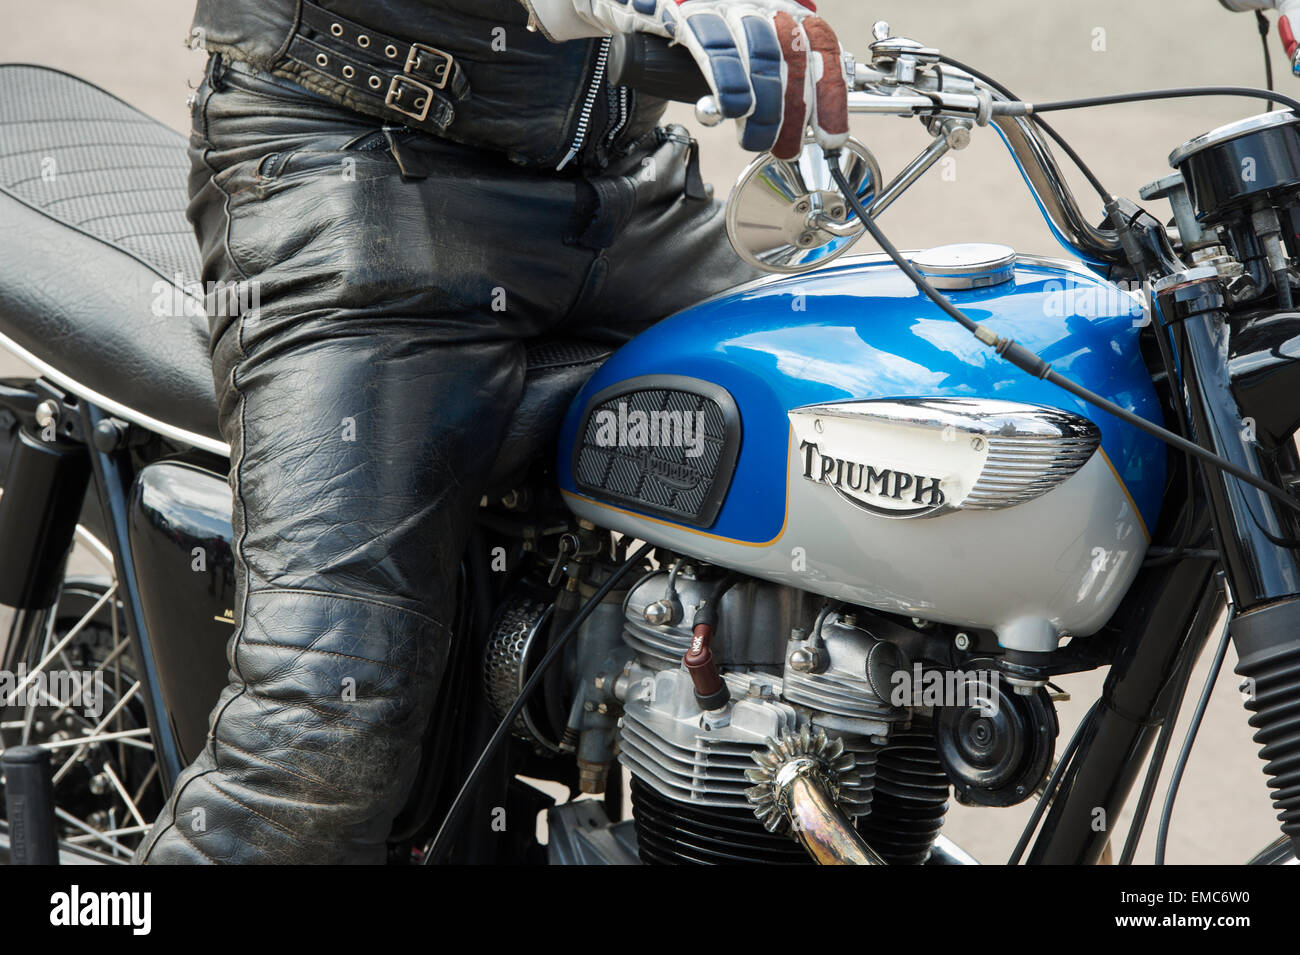 Triumph Motorcycle Dealership Los Angeles | Reviewmotors.co